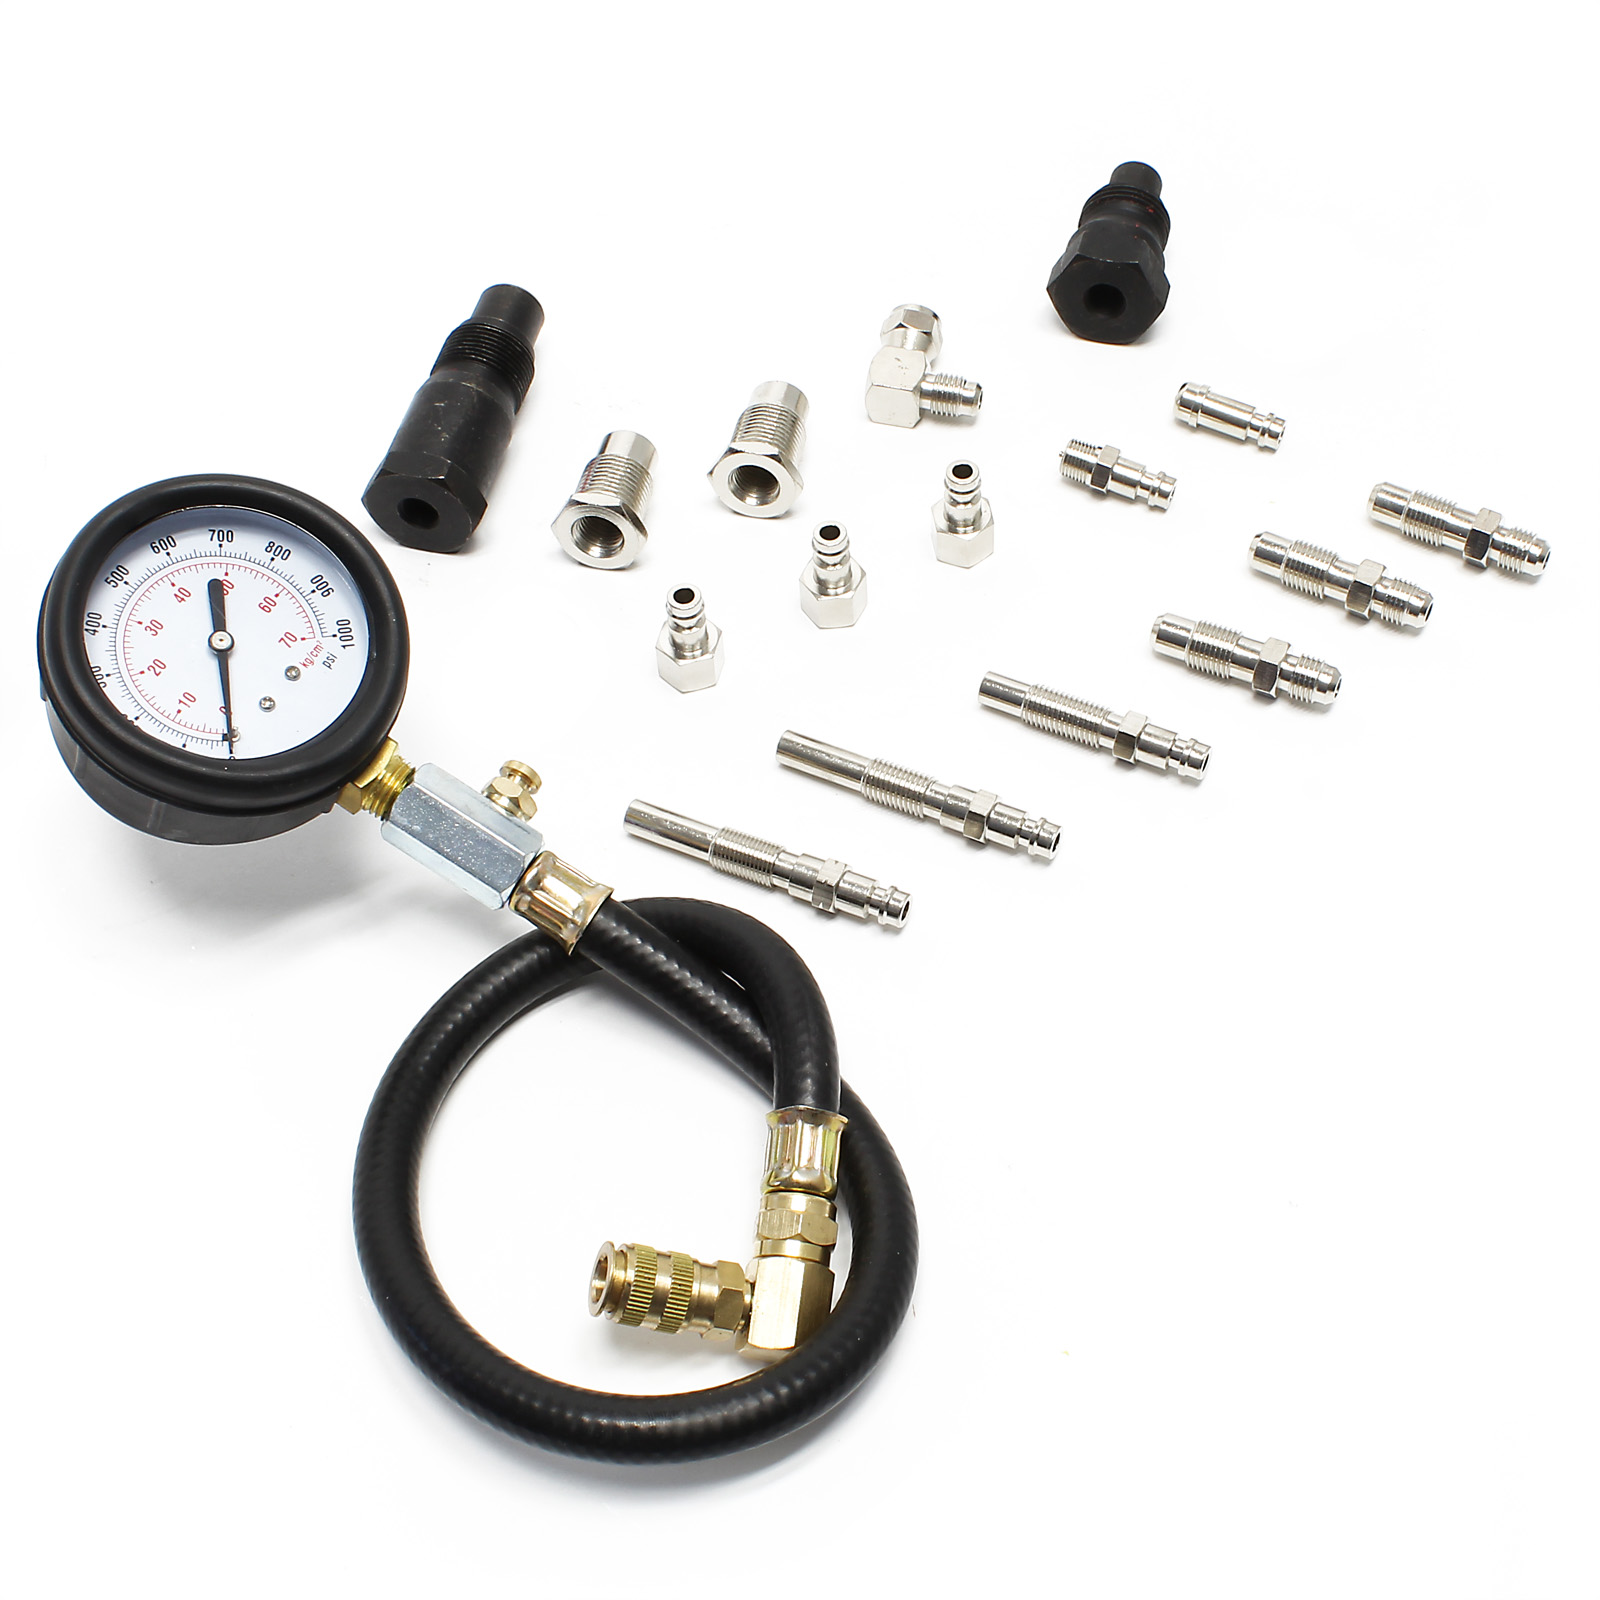 17 Stücke Diesel TDI CDI Motorkompressionstester Diagnose Test Manometer Kit für Auto Traktor Kompressionstester